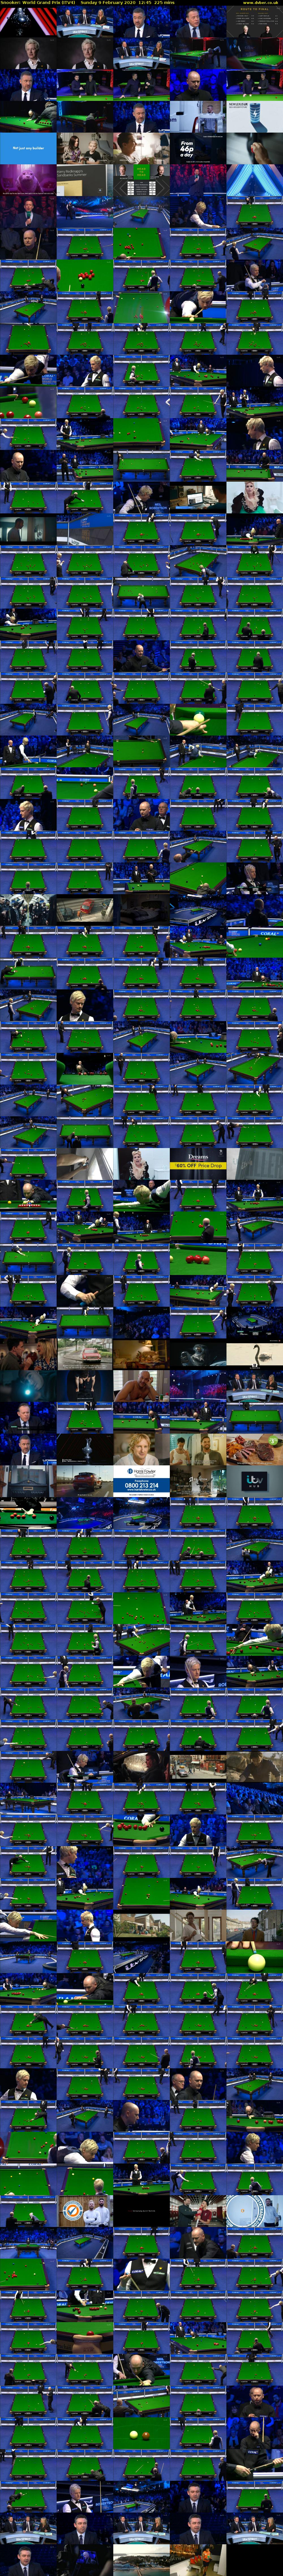 Snooker: World Grand Prix (ITV4) Sunday 9 February 2020 12:45 - 16:30